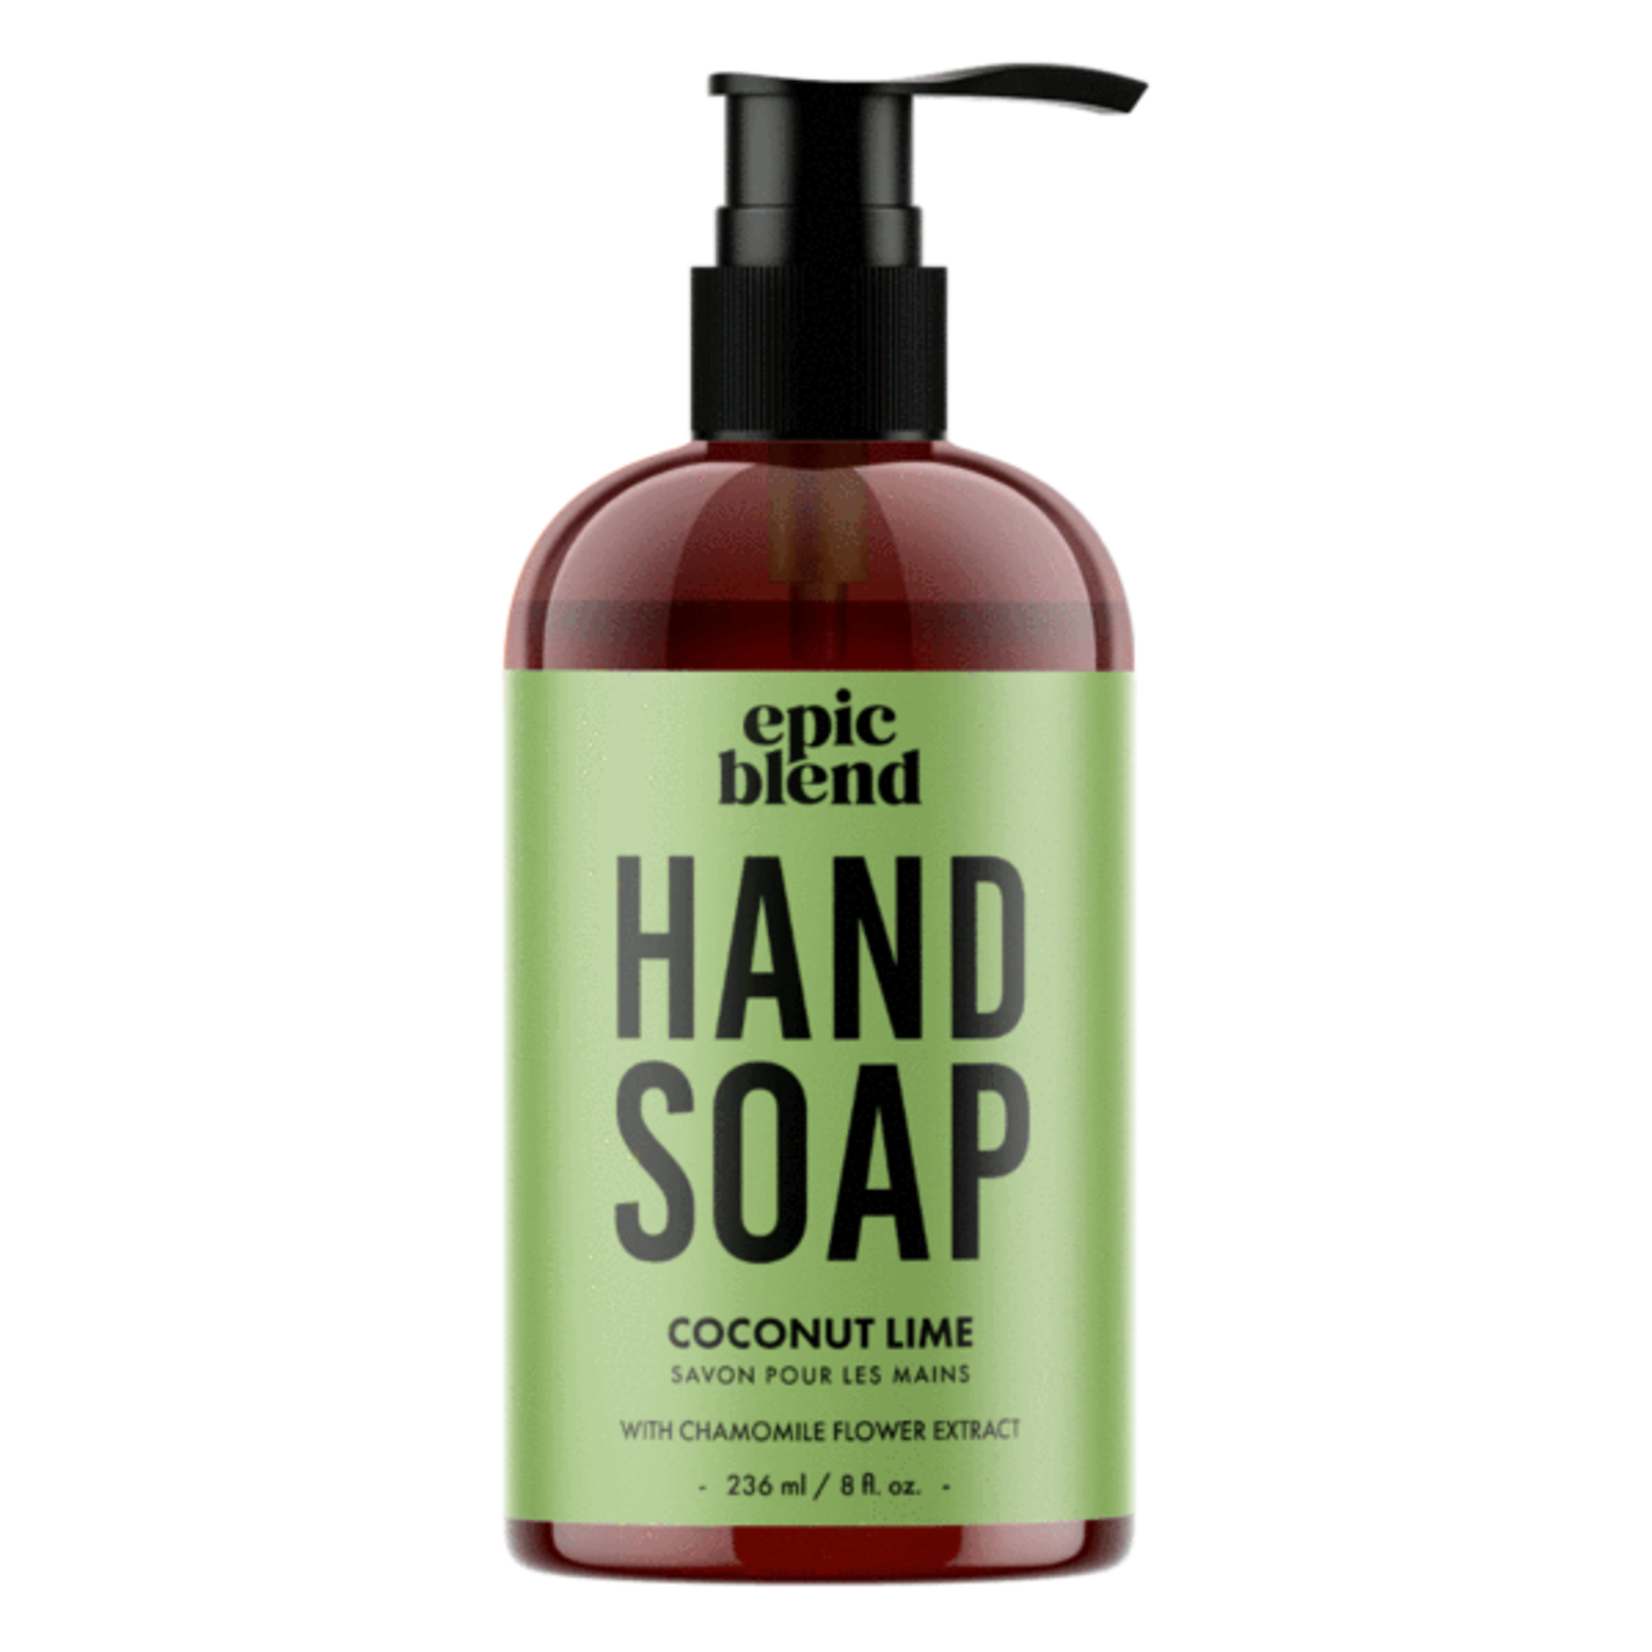 Epicblend Epic Blend Hand Soap 8oz